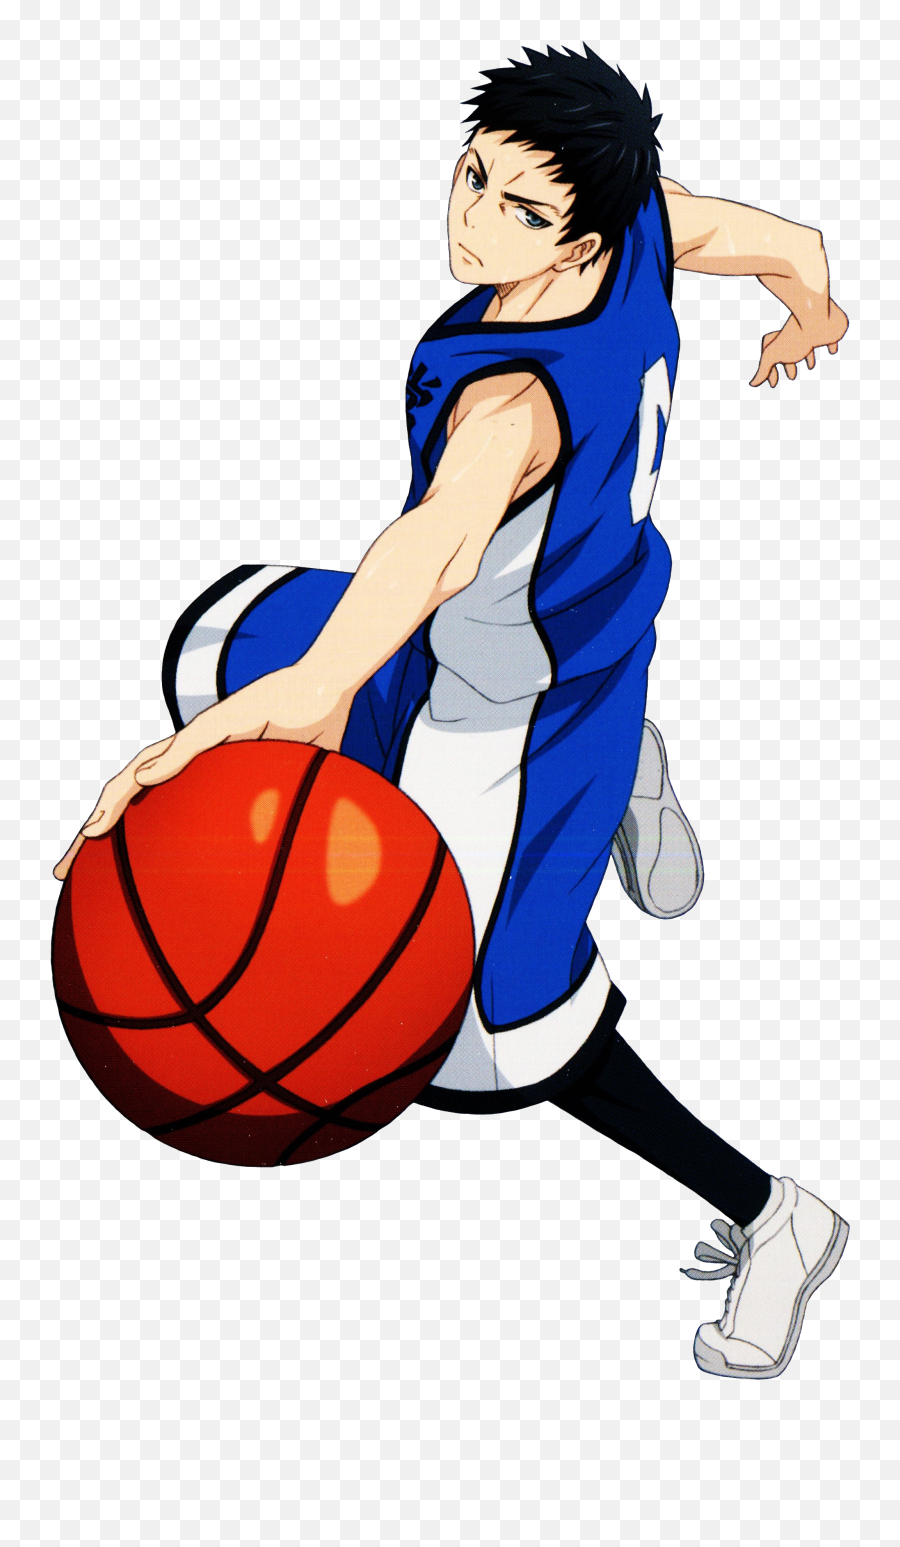 Kurokou0027s Basketball Transparent Diana Salsa Web U0026 Print - Basketball Player Anime Png,Basketball Transparent